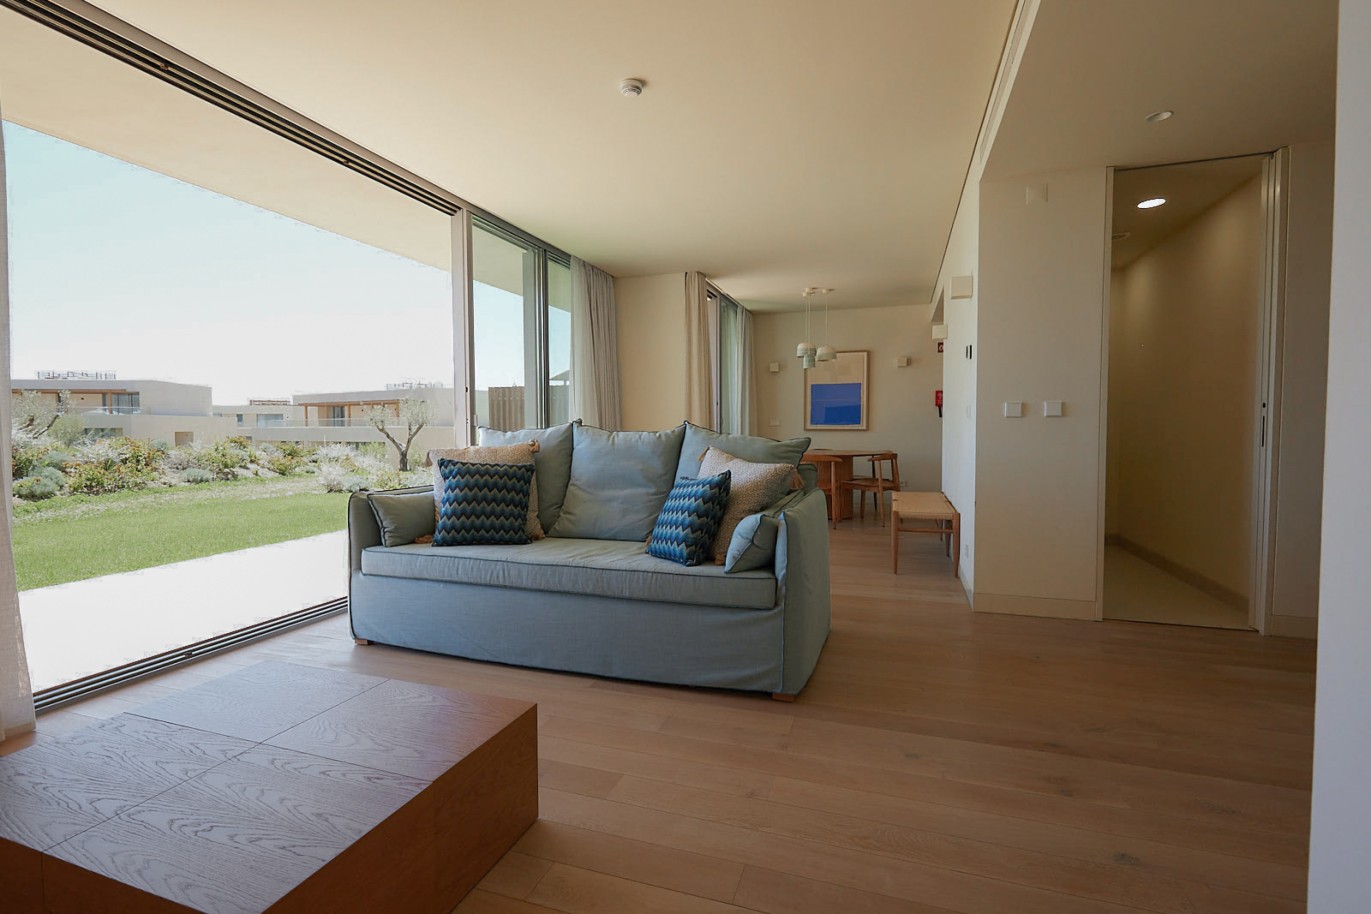 2 bedroom apartment in resort, for sale in Porches, Algarve_230774